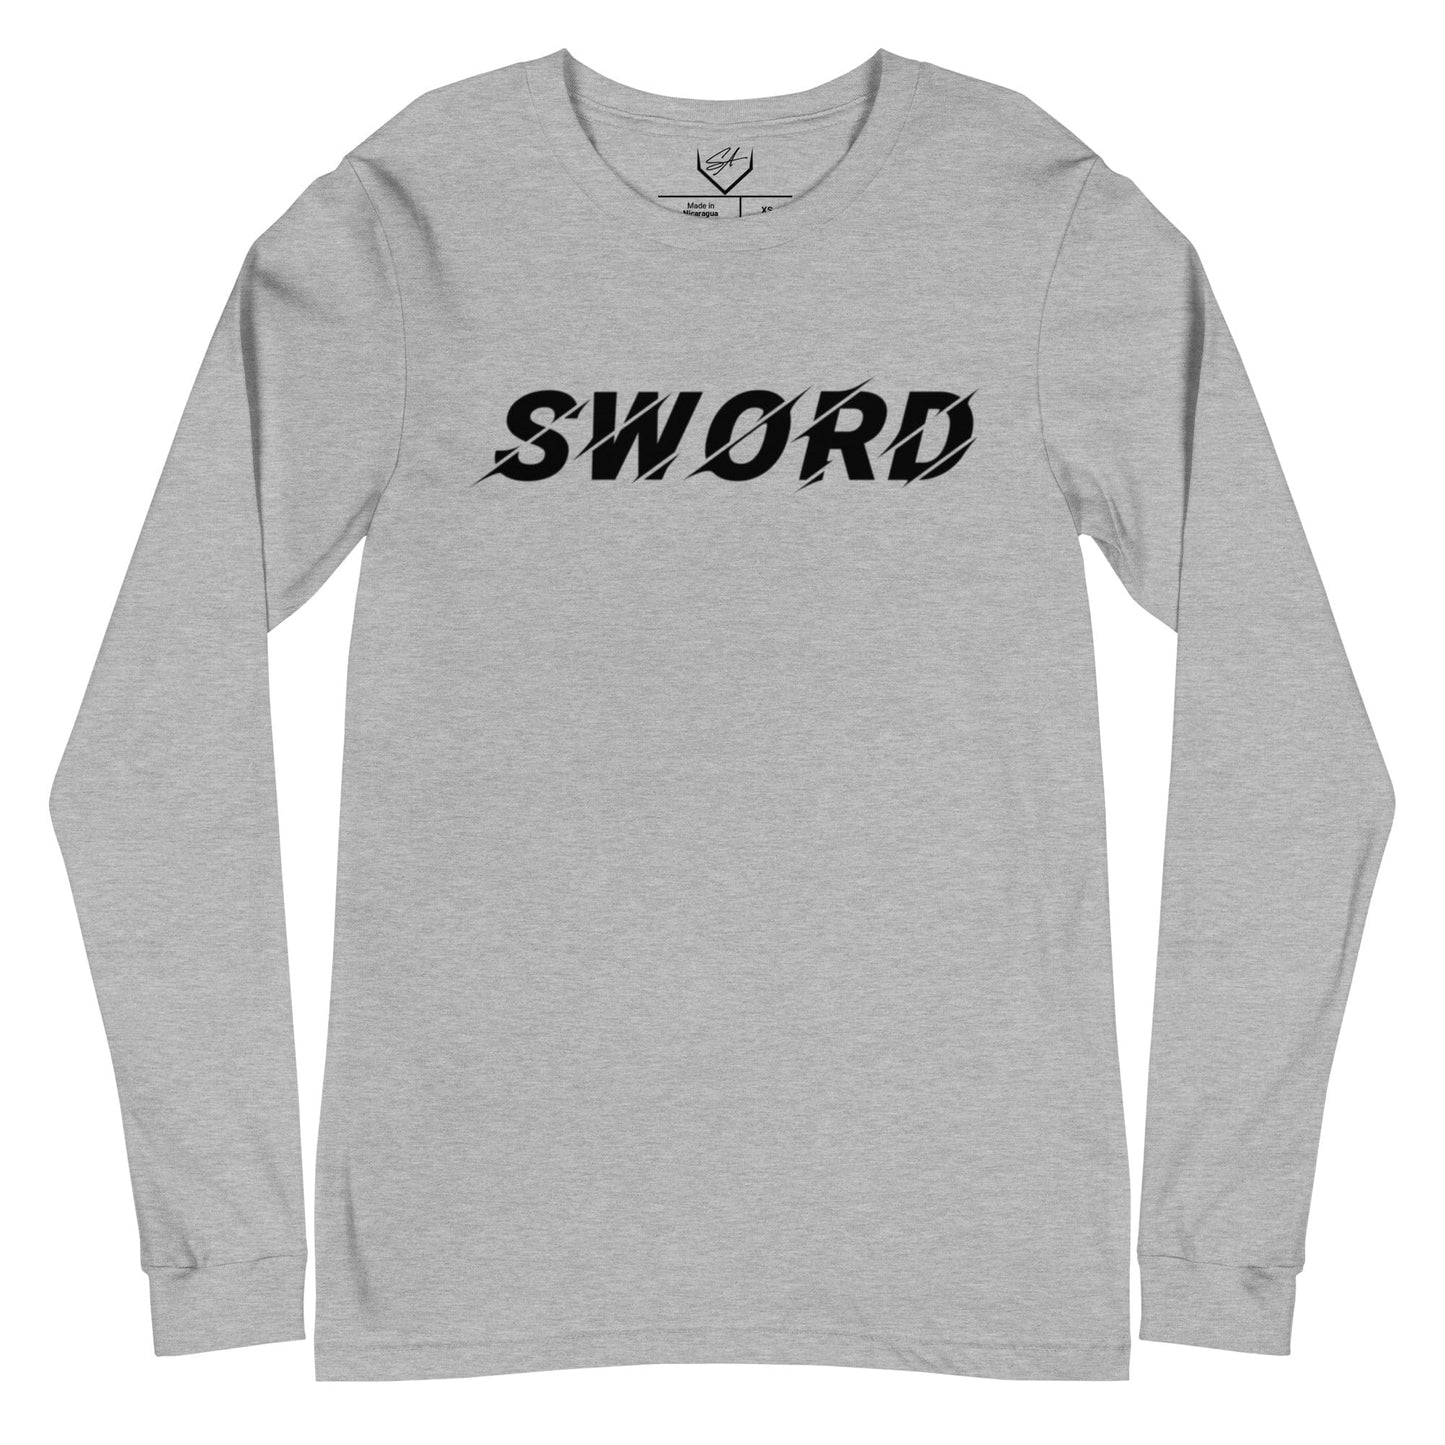 Sword - Adult Long Sleeve